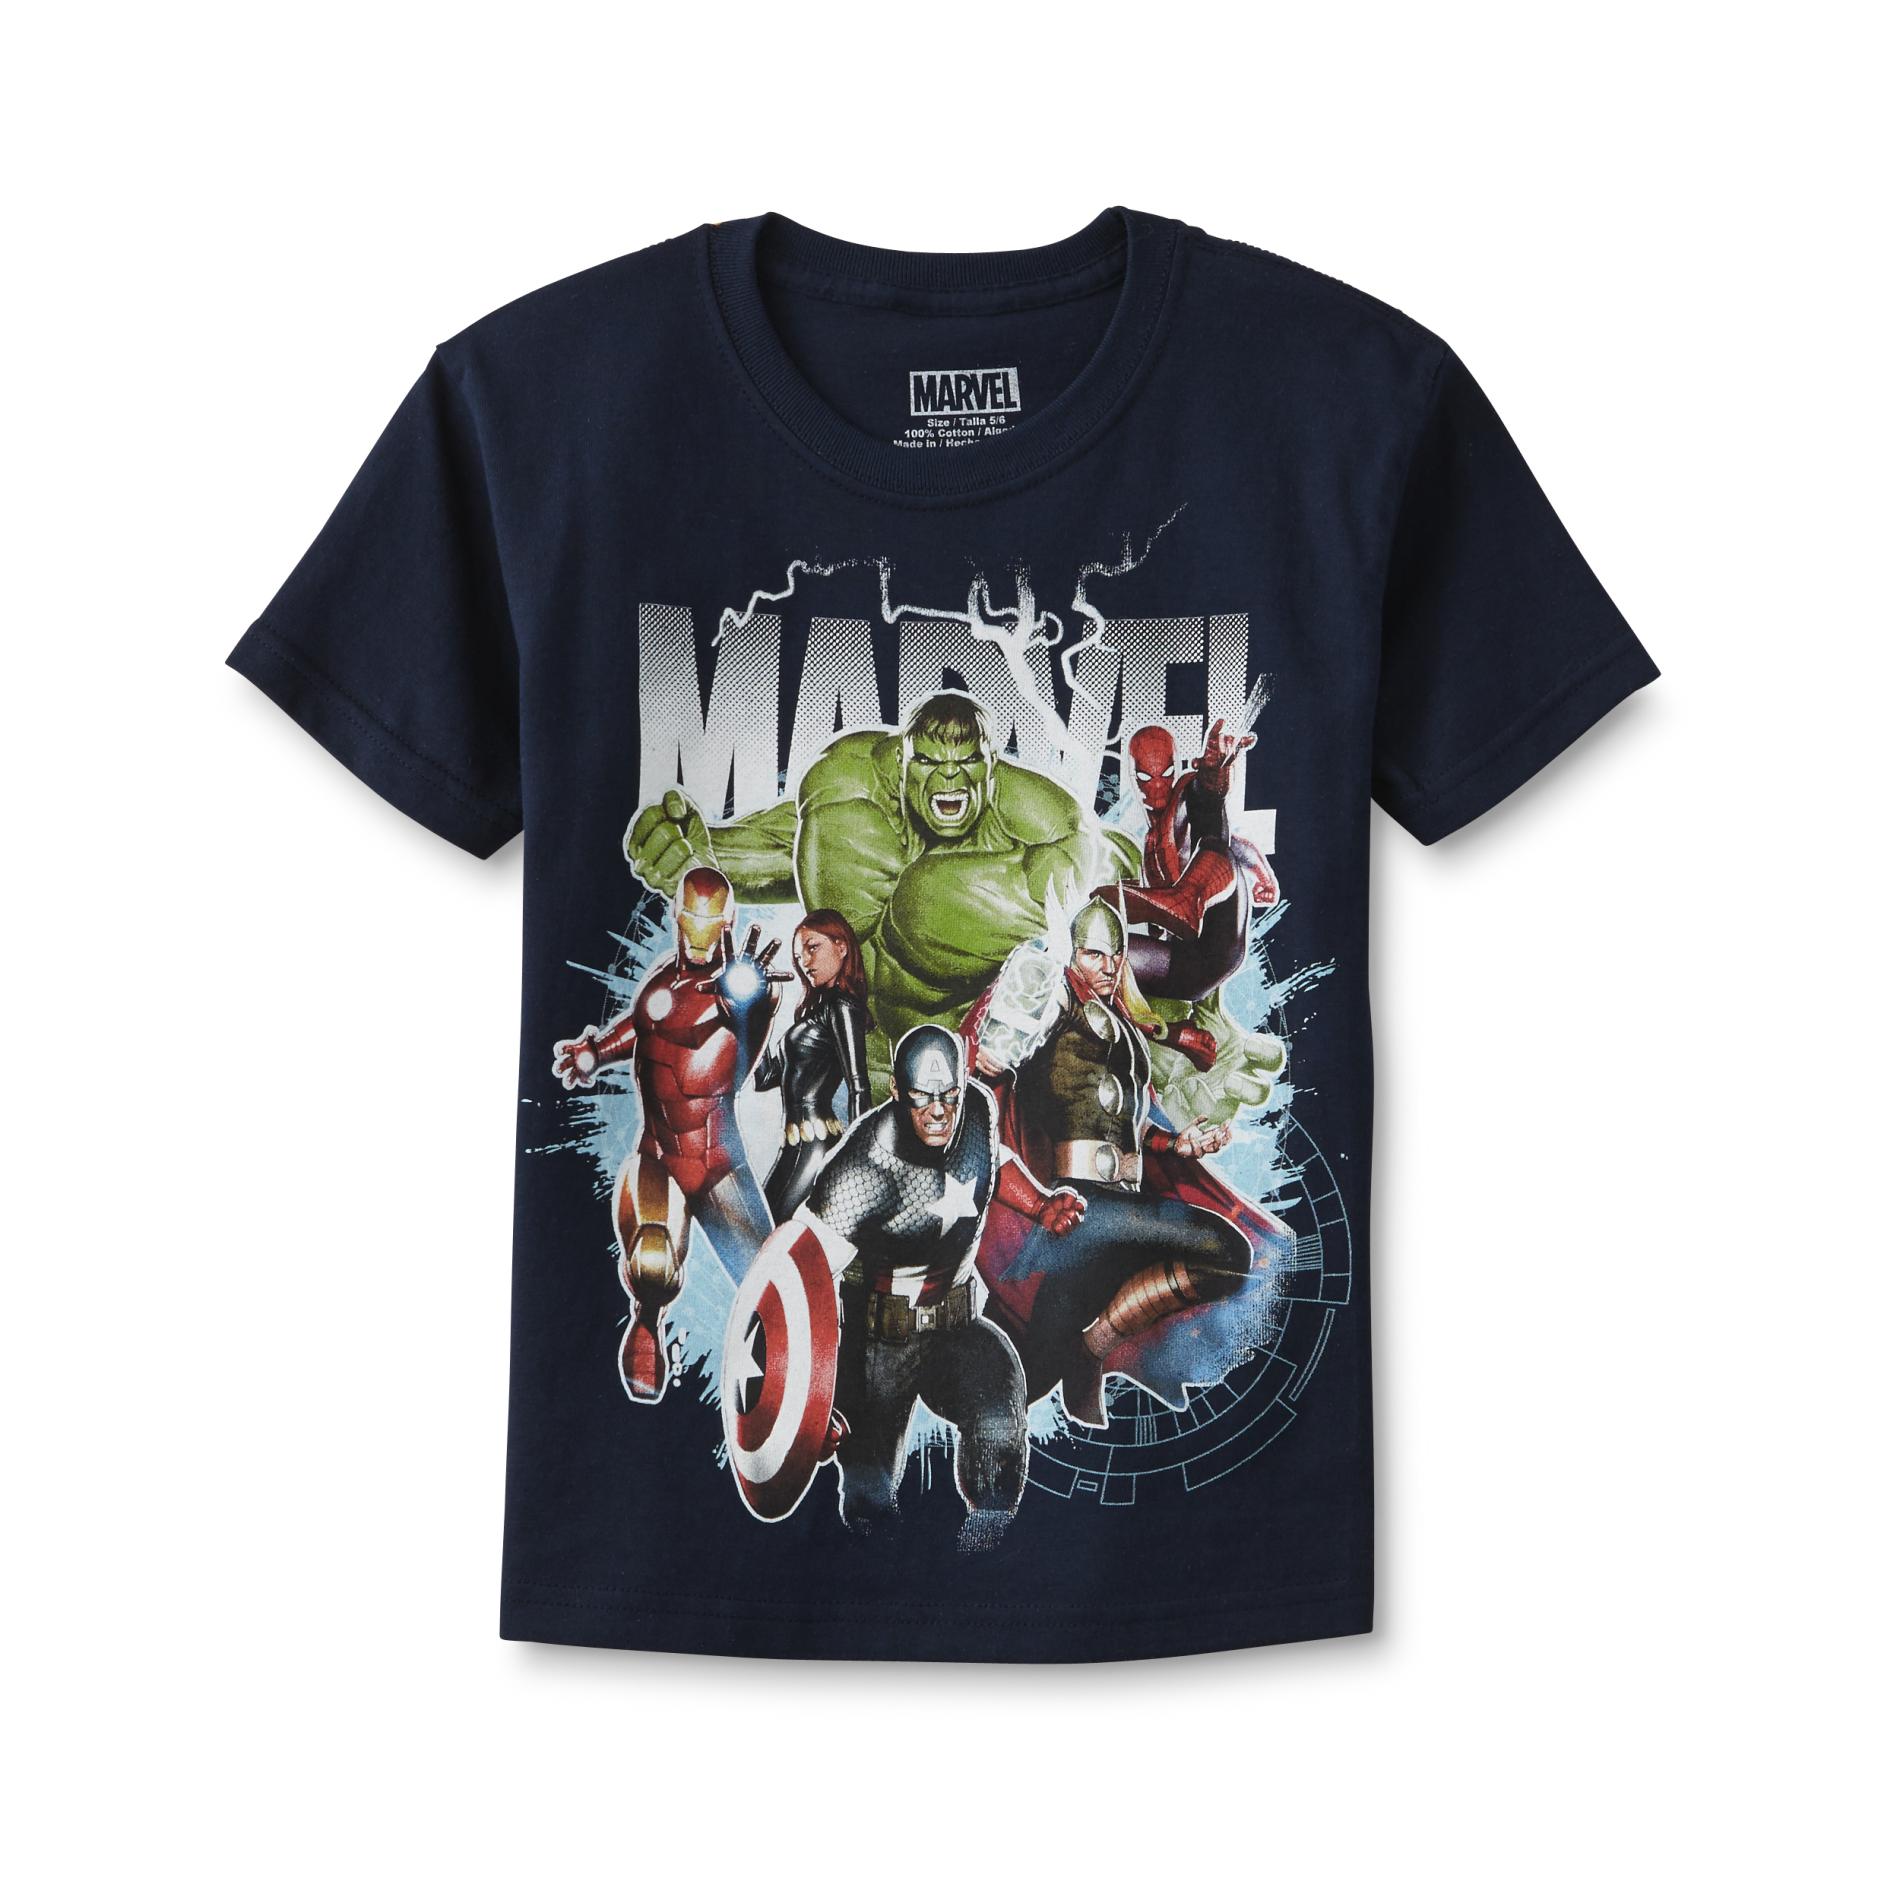 Marvel The Avengers Boy's Graphic T-Shirt